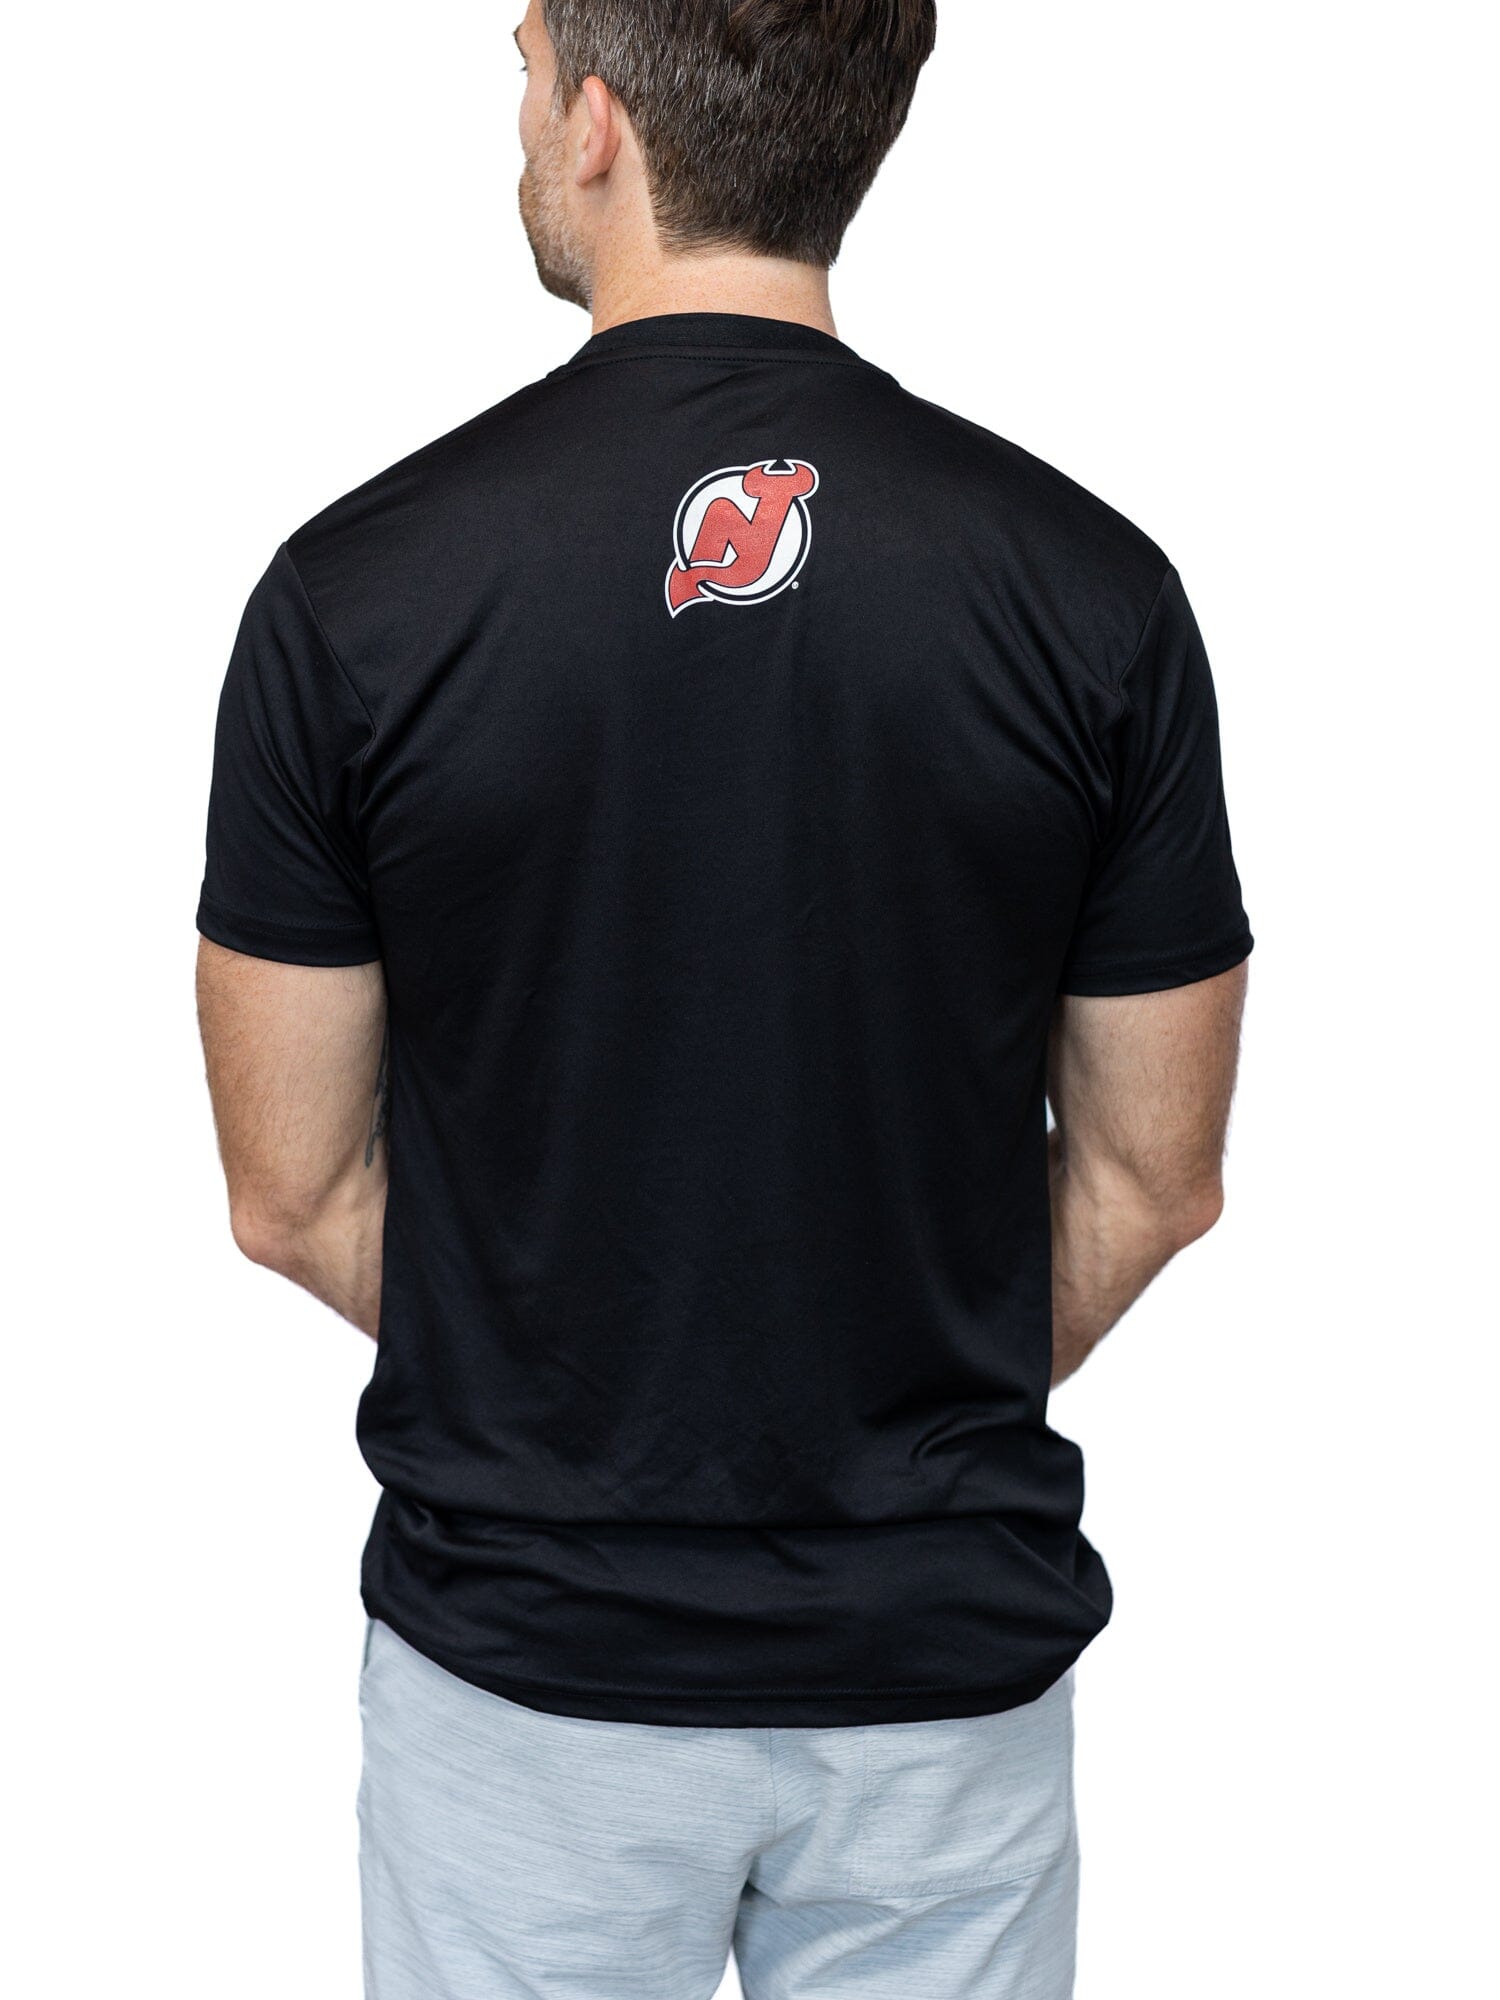 New Jersey Devils "Full Fandom" Moisture Wicking T-Shirt - Back